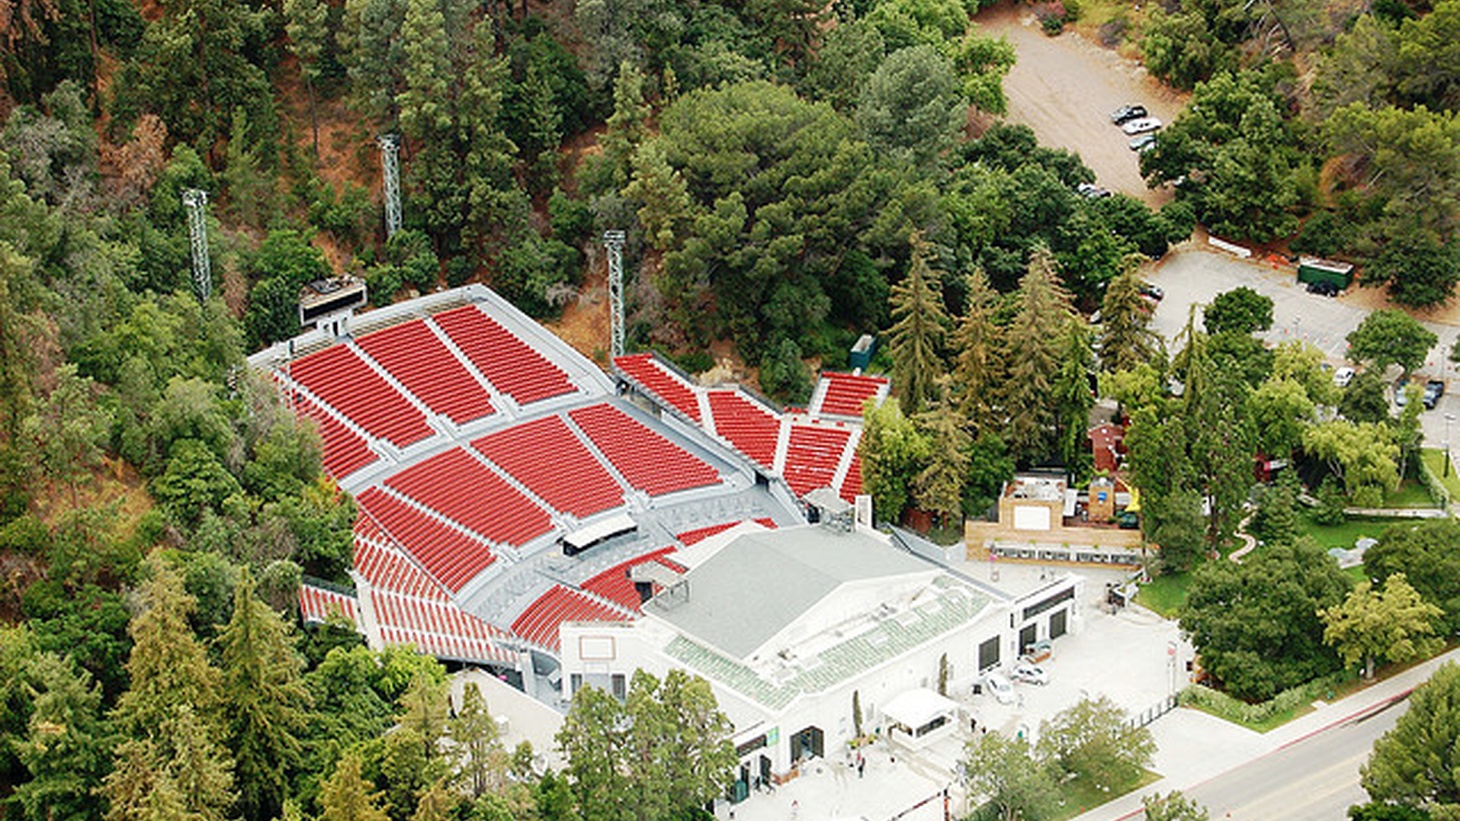 Historic Greek Theatre Cancels 2020 Season - Canyon News